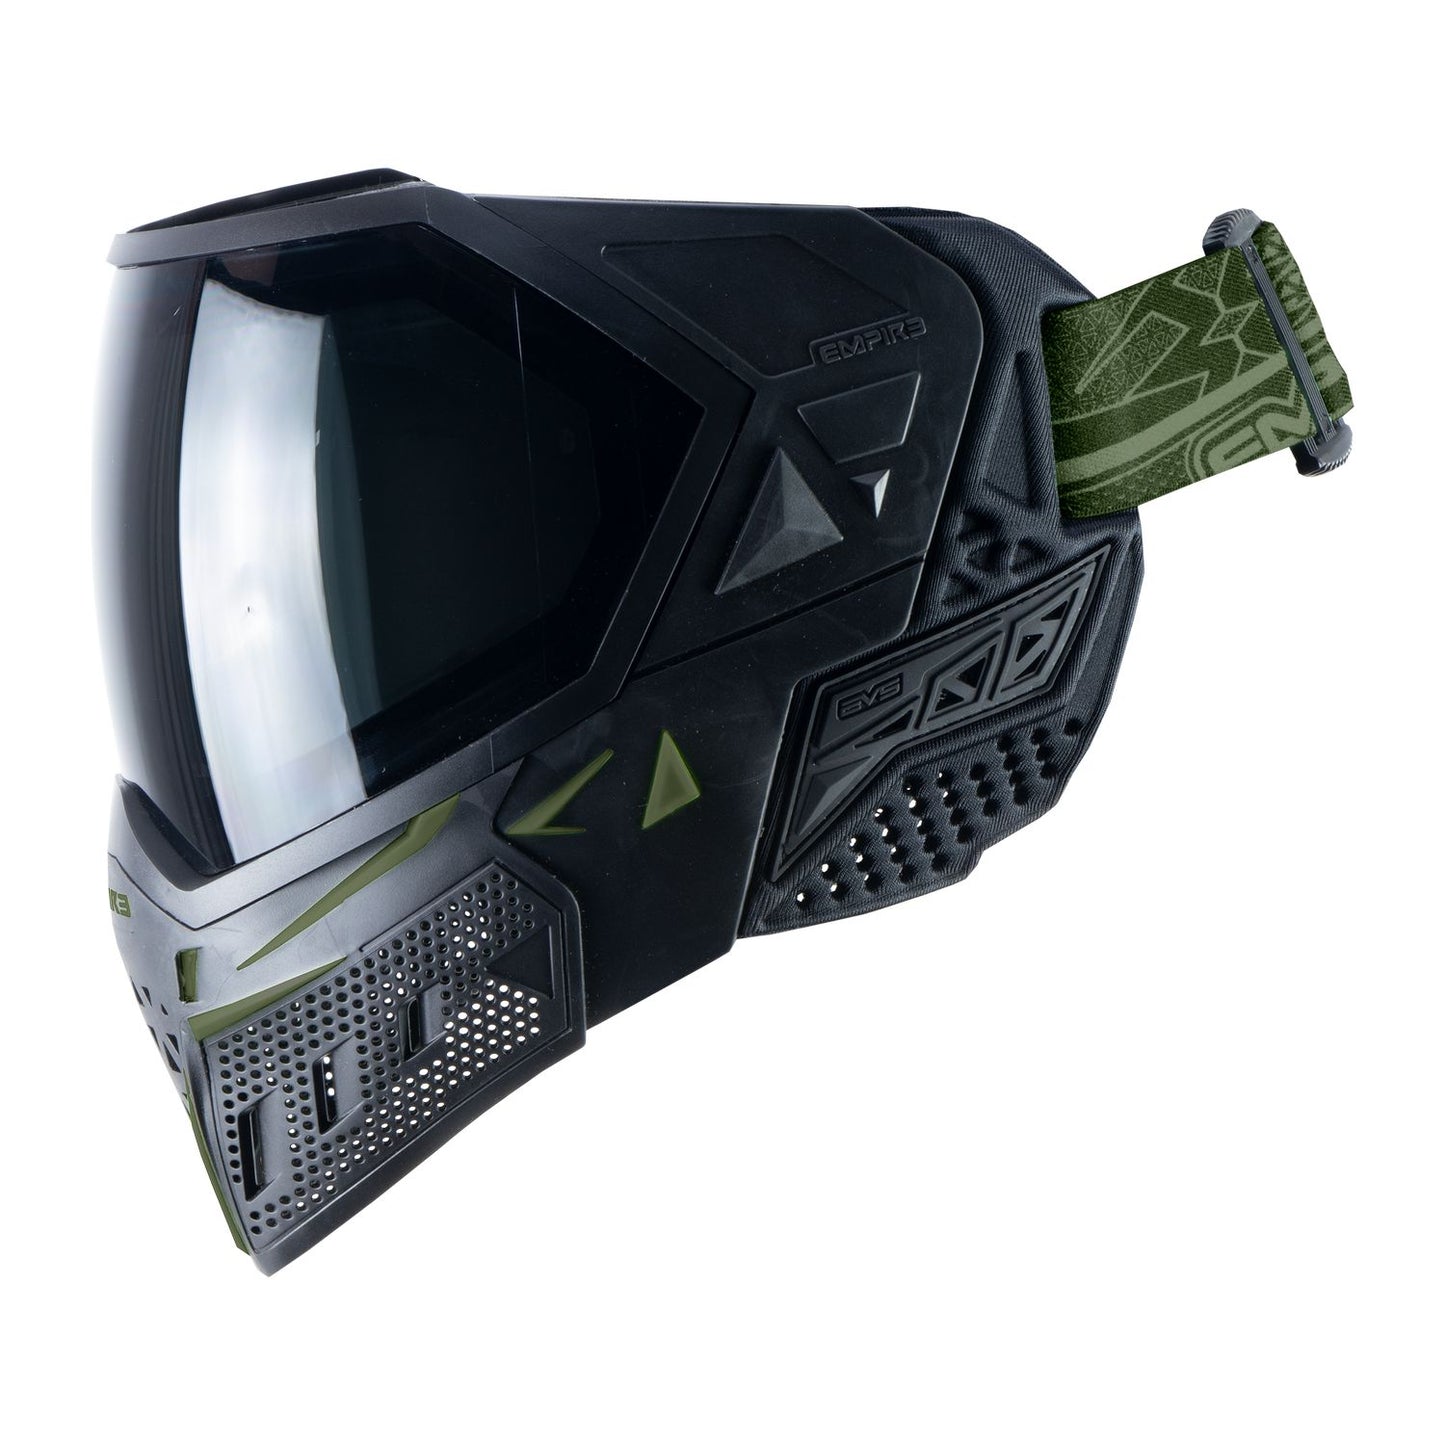 Empire EVS Enhanced Vision System Goggle - Black/Olive - includes 2 lenses